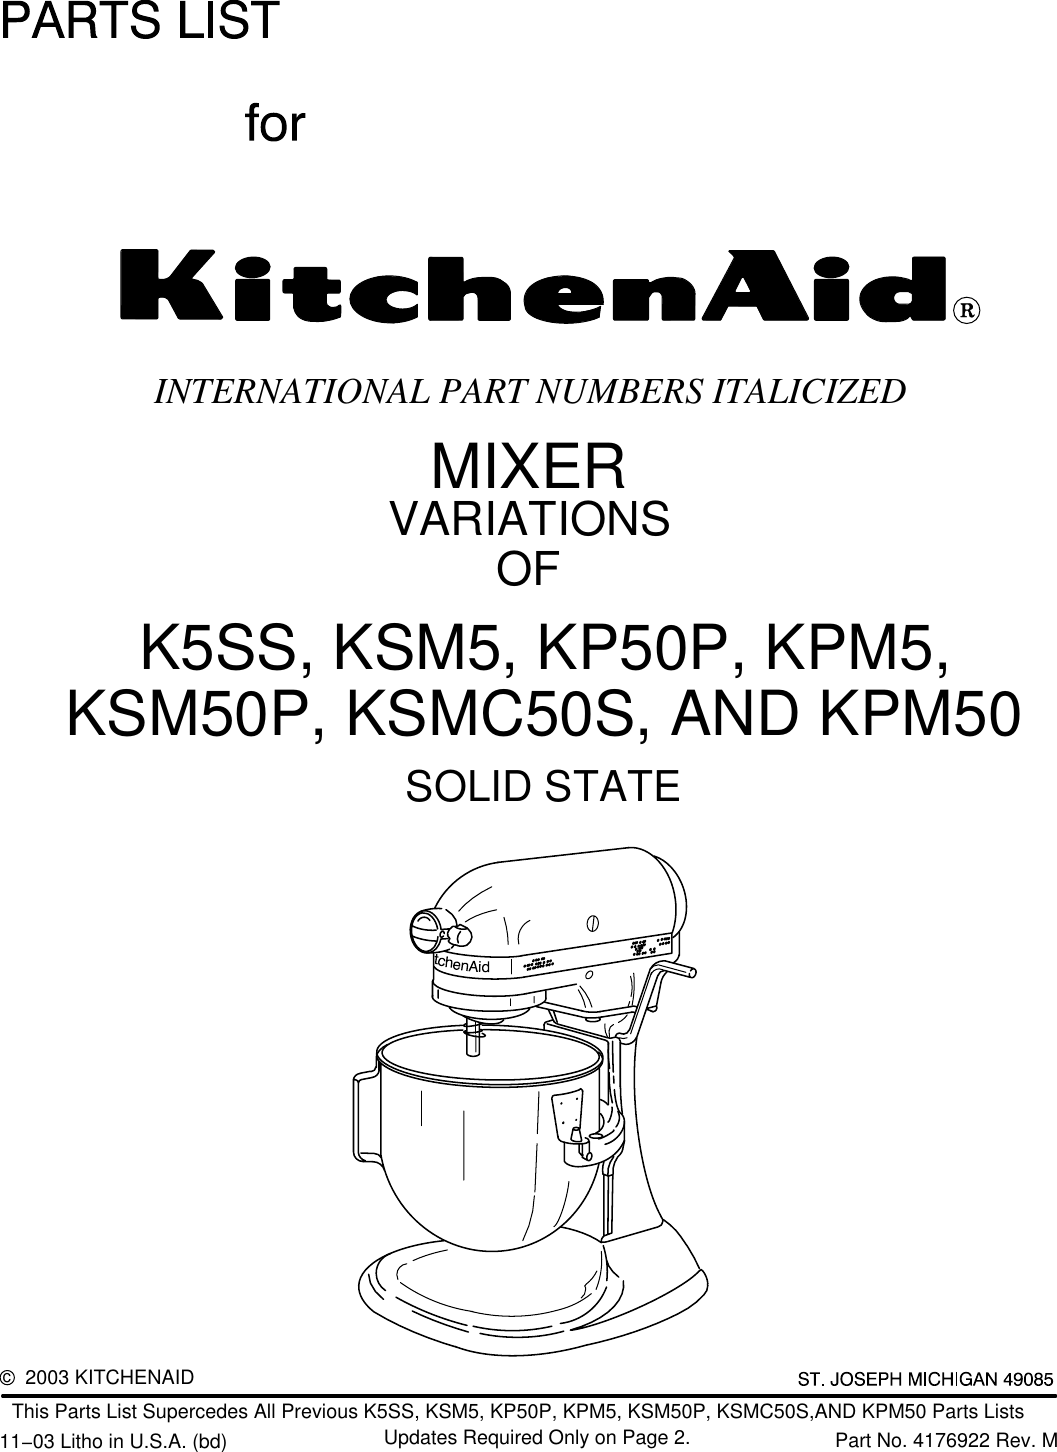 Kitchenaid Kitchen Aid Mixer Kp50P Users Manual